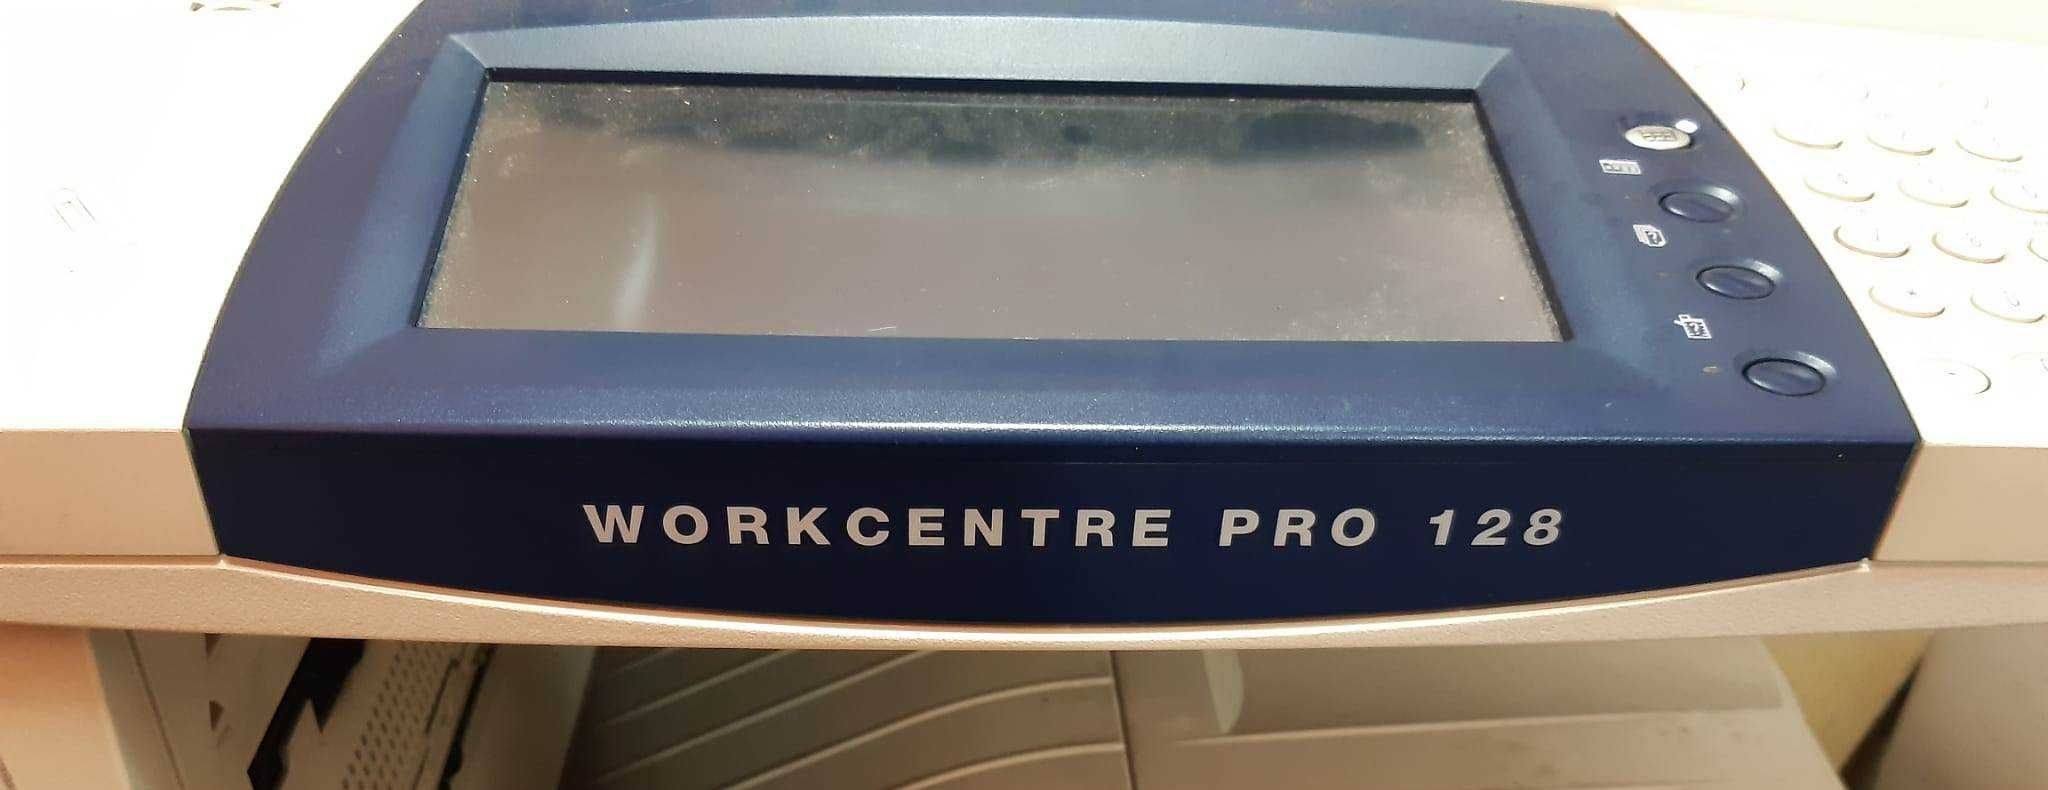 Xerox WorkCenter Pro 128 professional